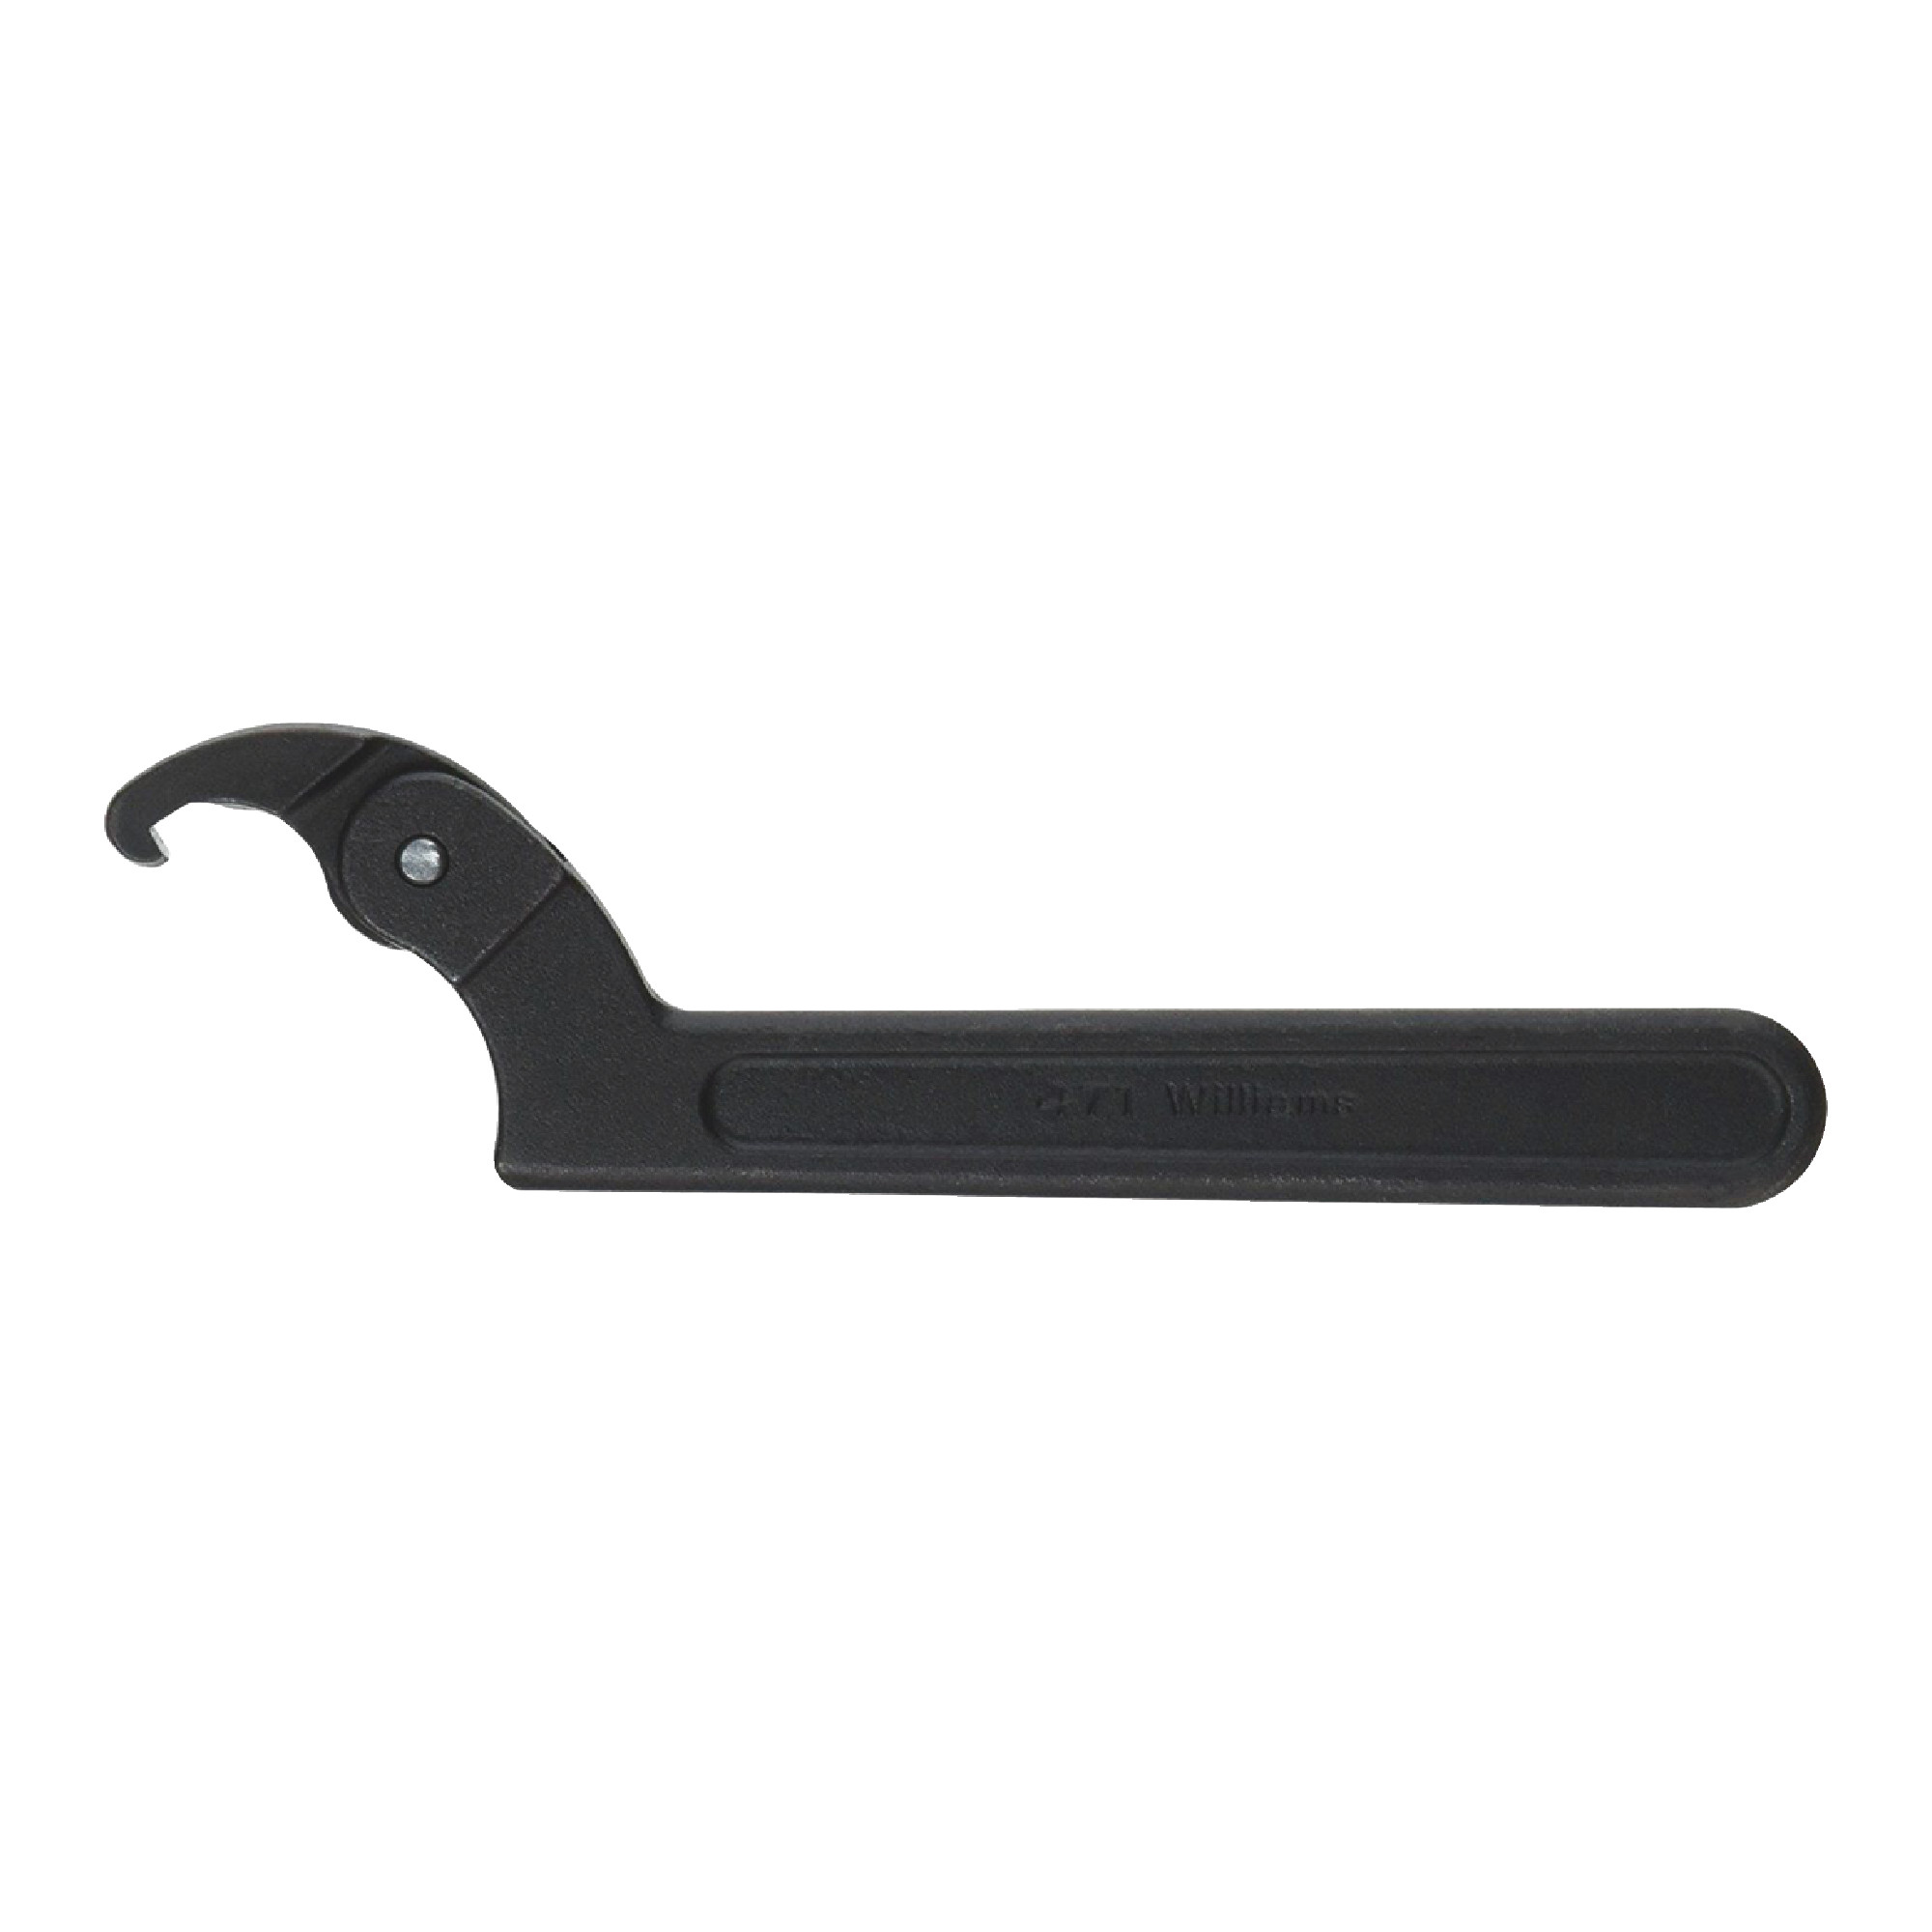 Adjustable Hook Spanner Wrench - Model: 474  Diameter: 2" - 4-3/4"  Height: 3/16"  Overall Length: 11-1/2"